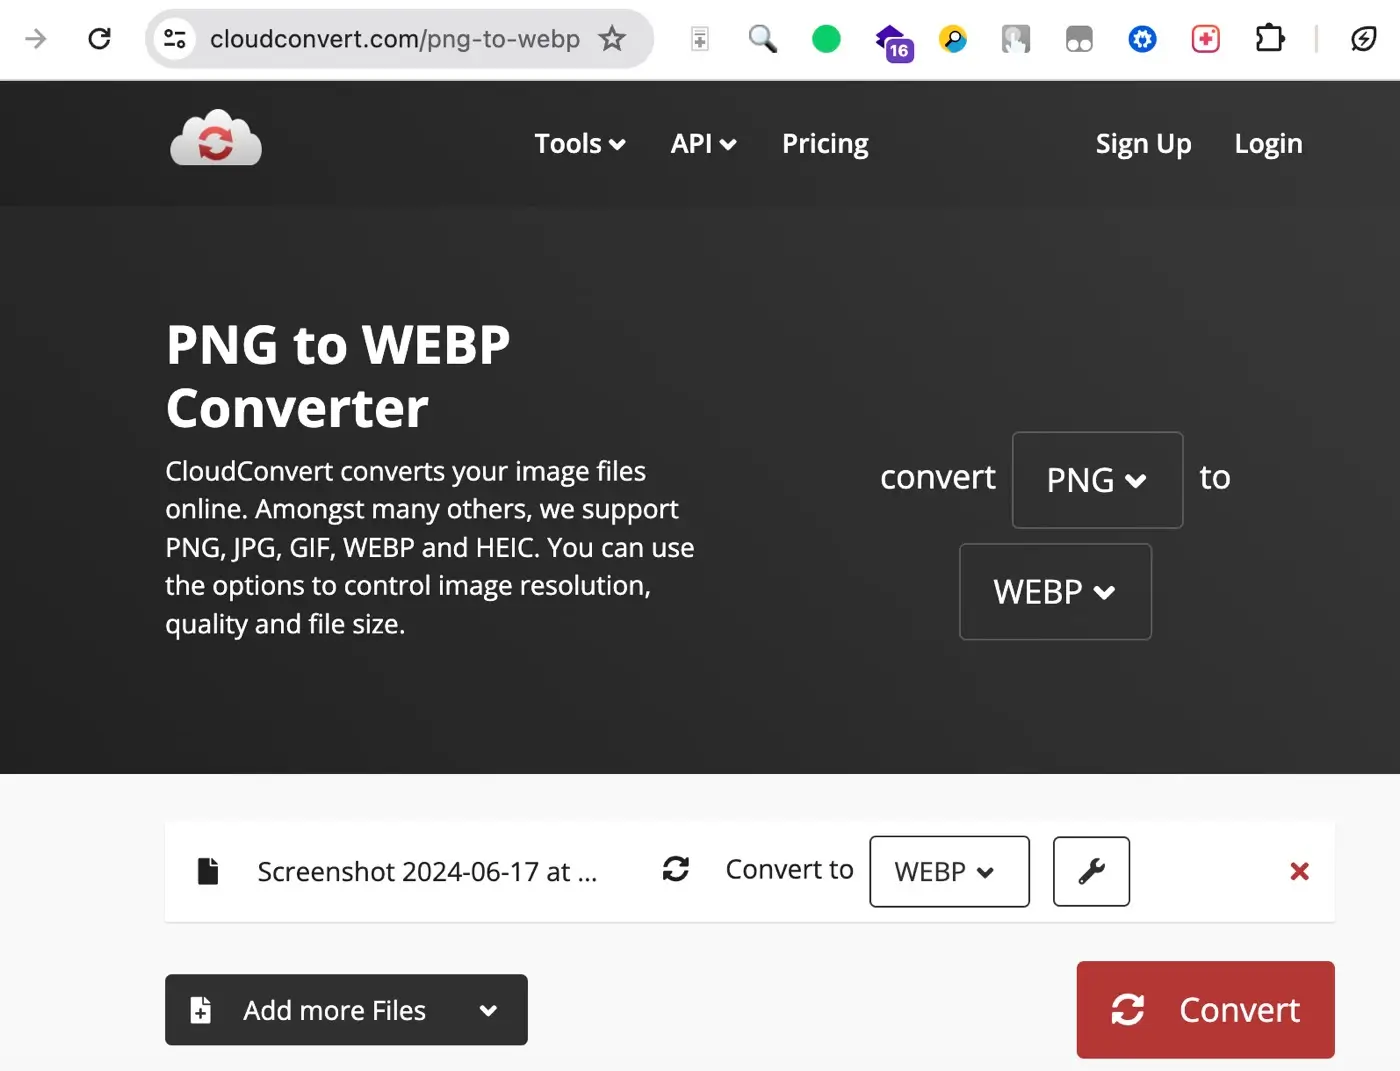 Select WebP format for conversion